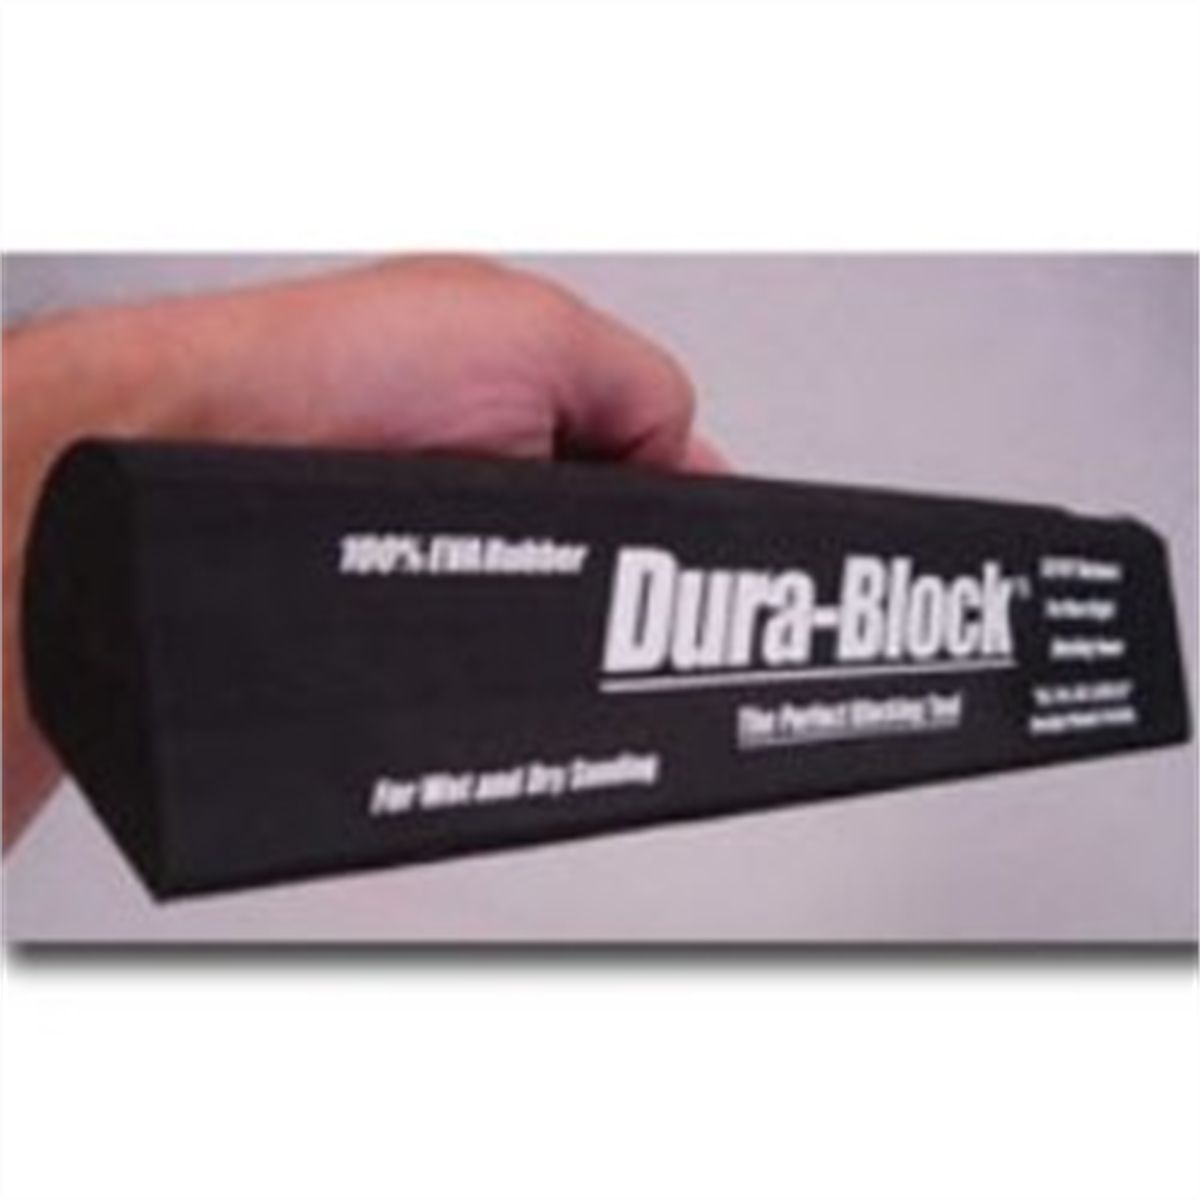 Dura-Block 16-1//2 Full Size Sanding Block